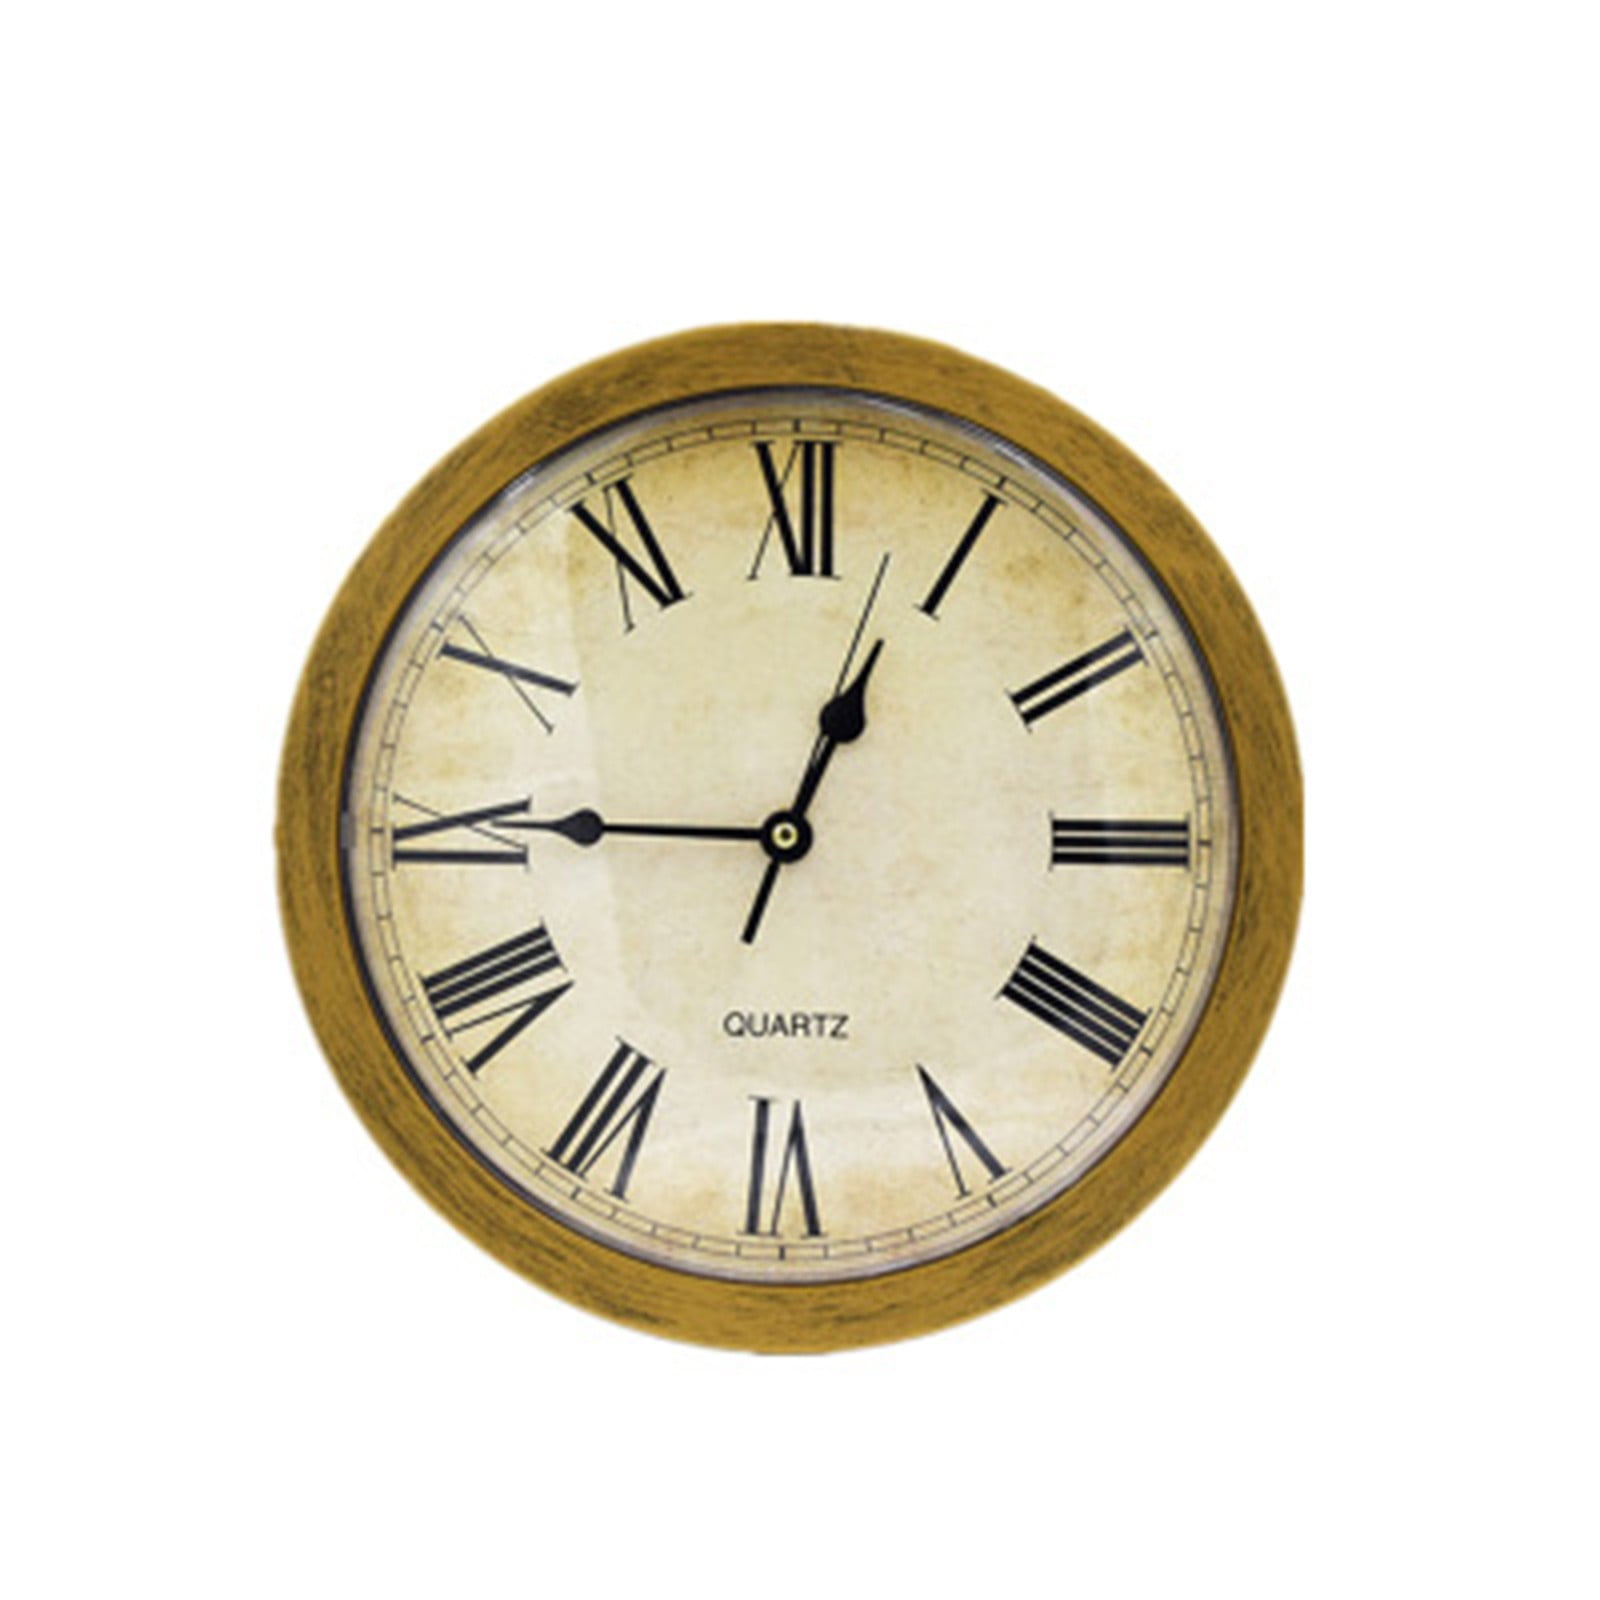 Stash Valuables Jewellery Gold  Home Safe Secret Wall Clock Gift Christmas Idea